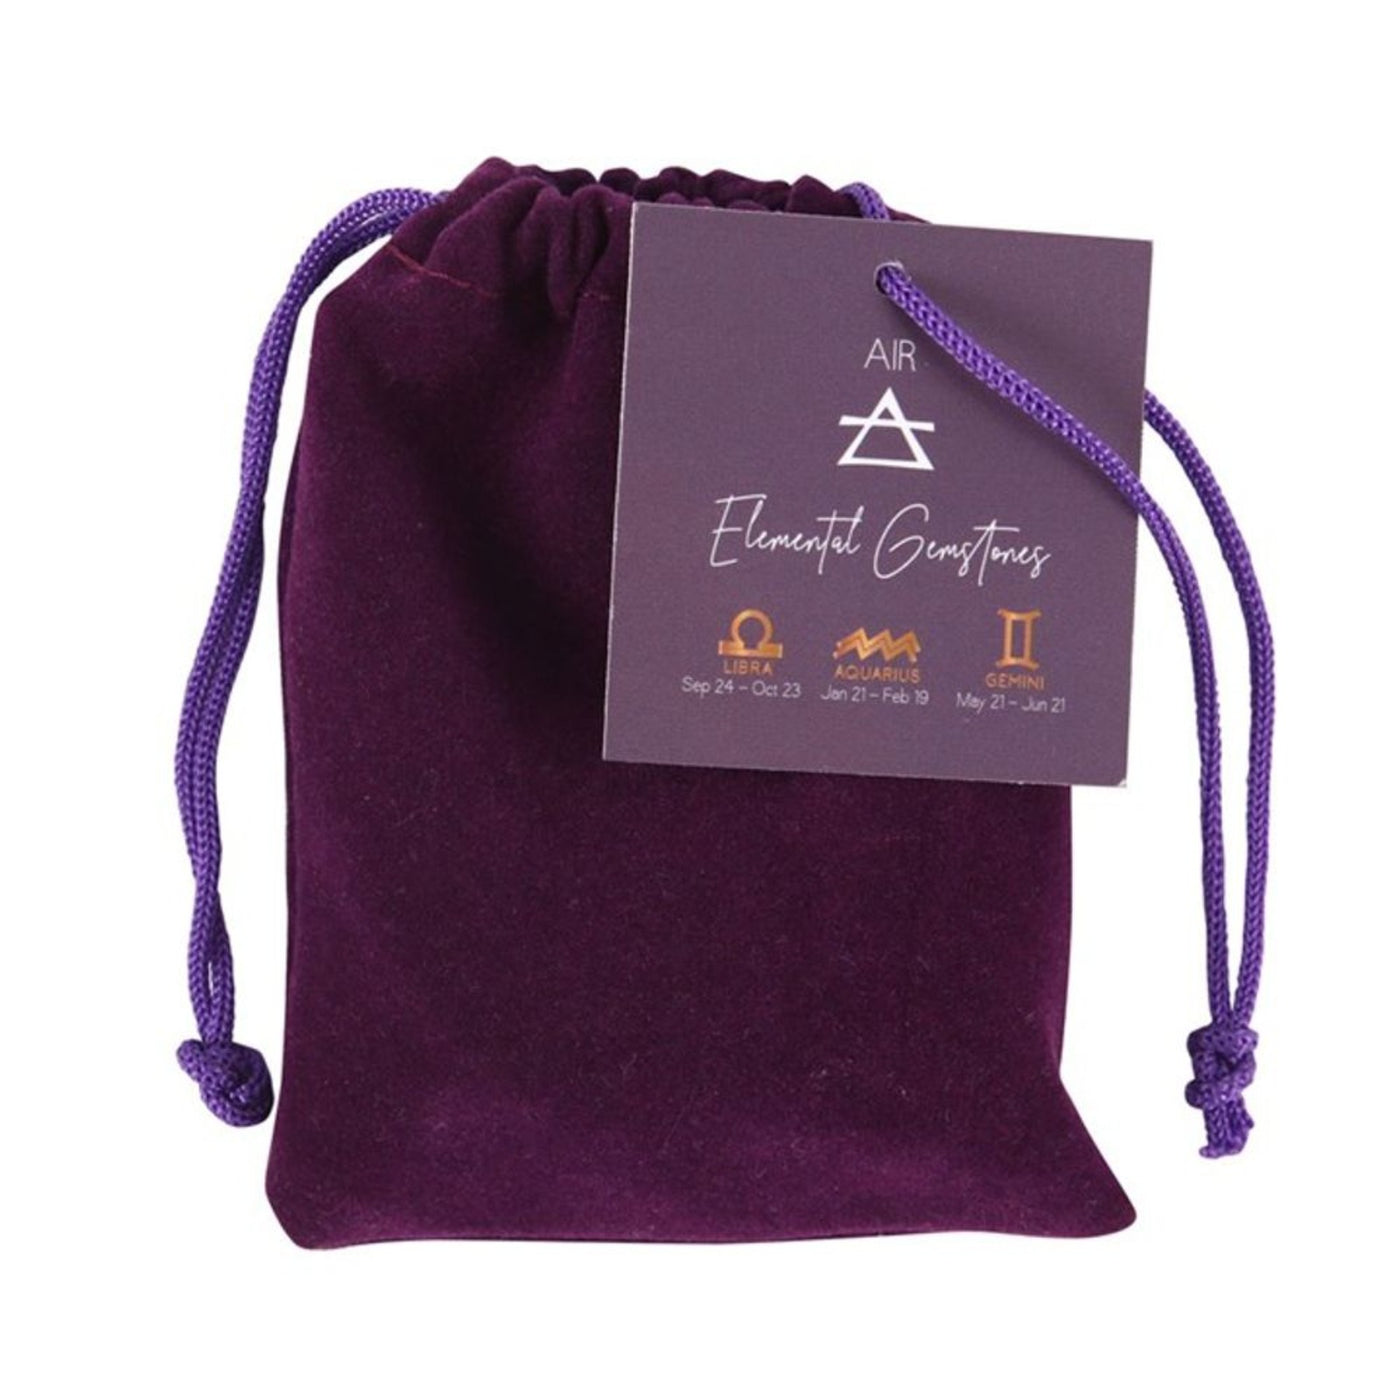 Air Element Tumble Gemstone Set In Purple Velvet Gift Pouch.